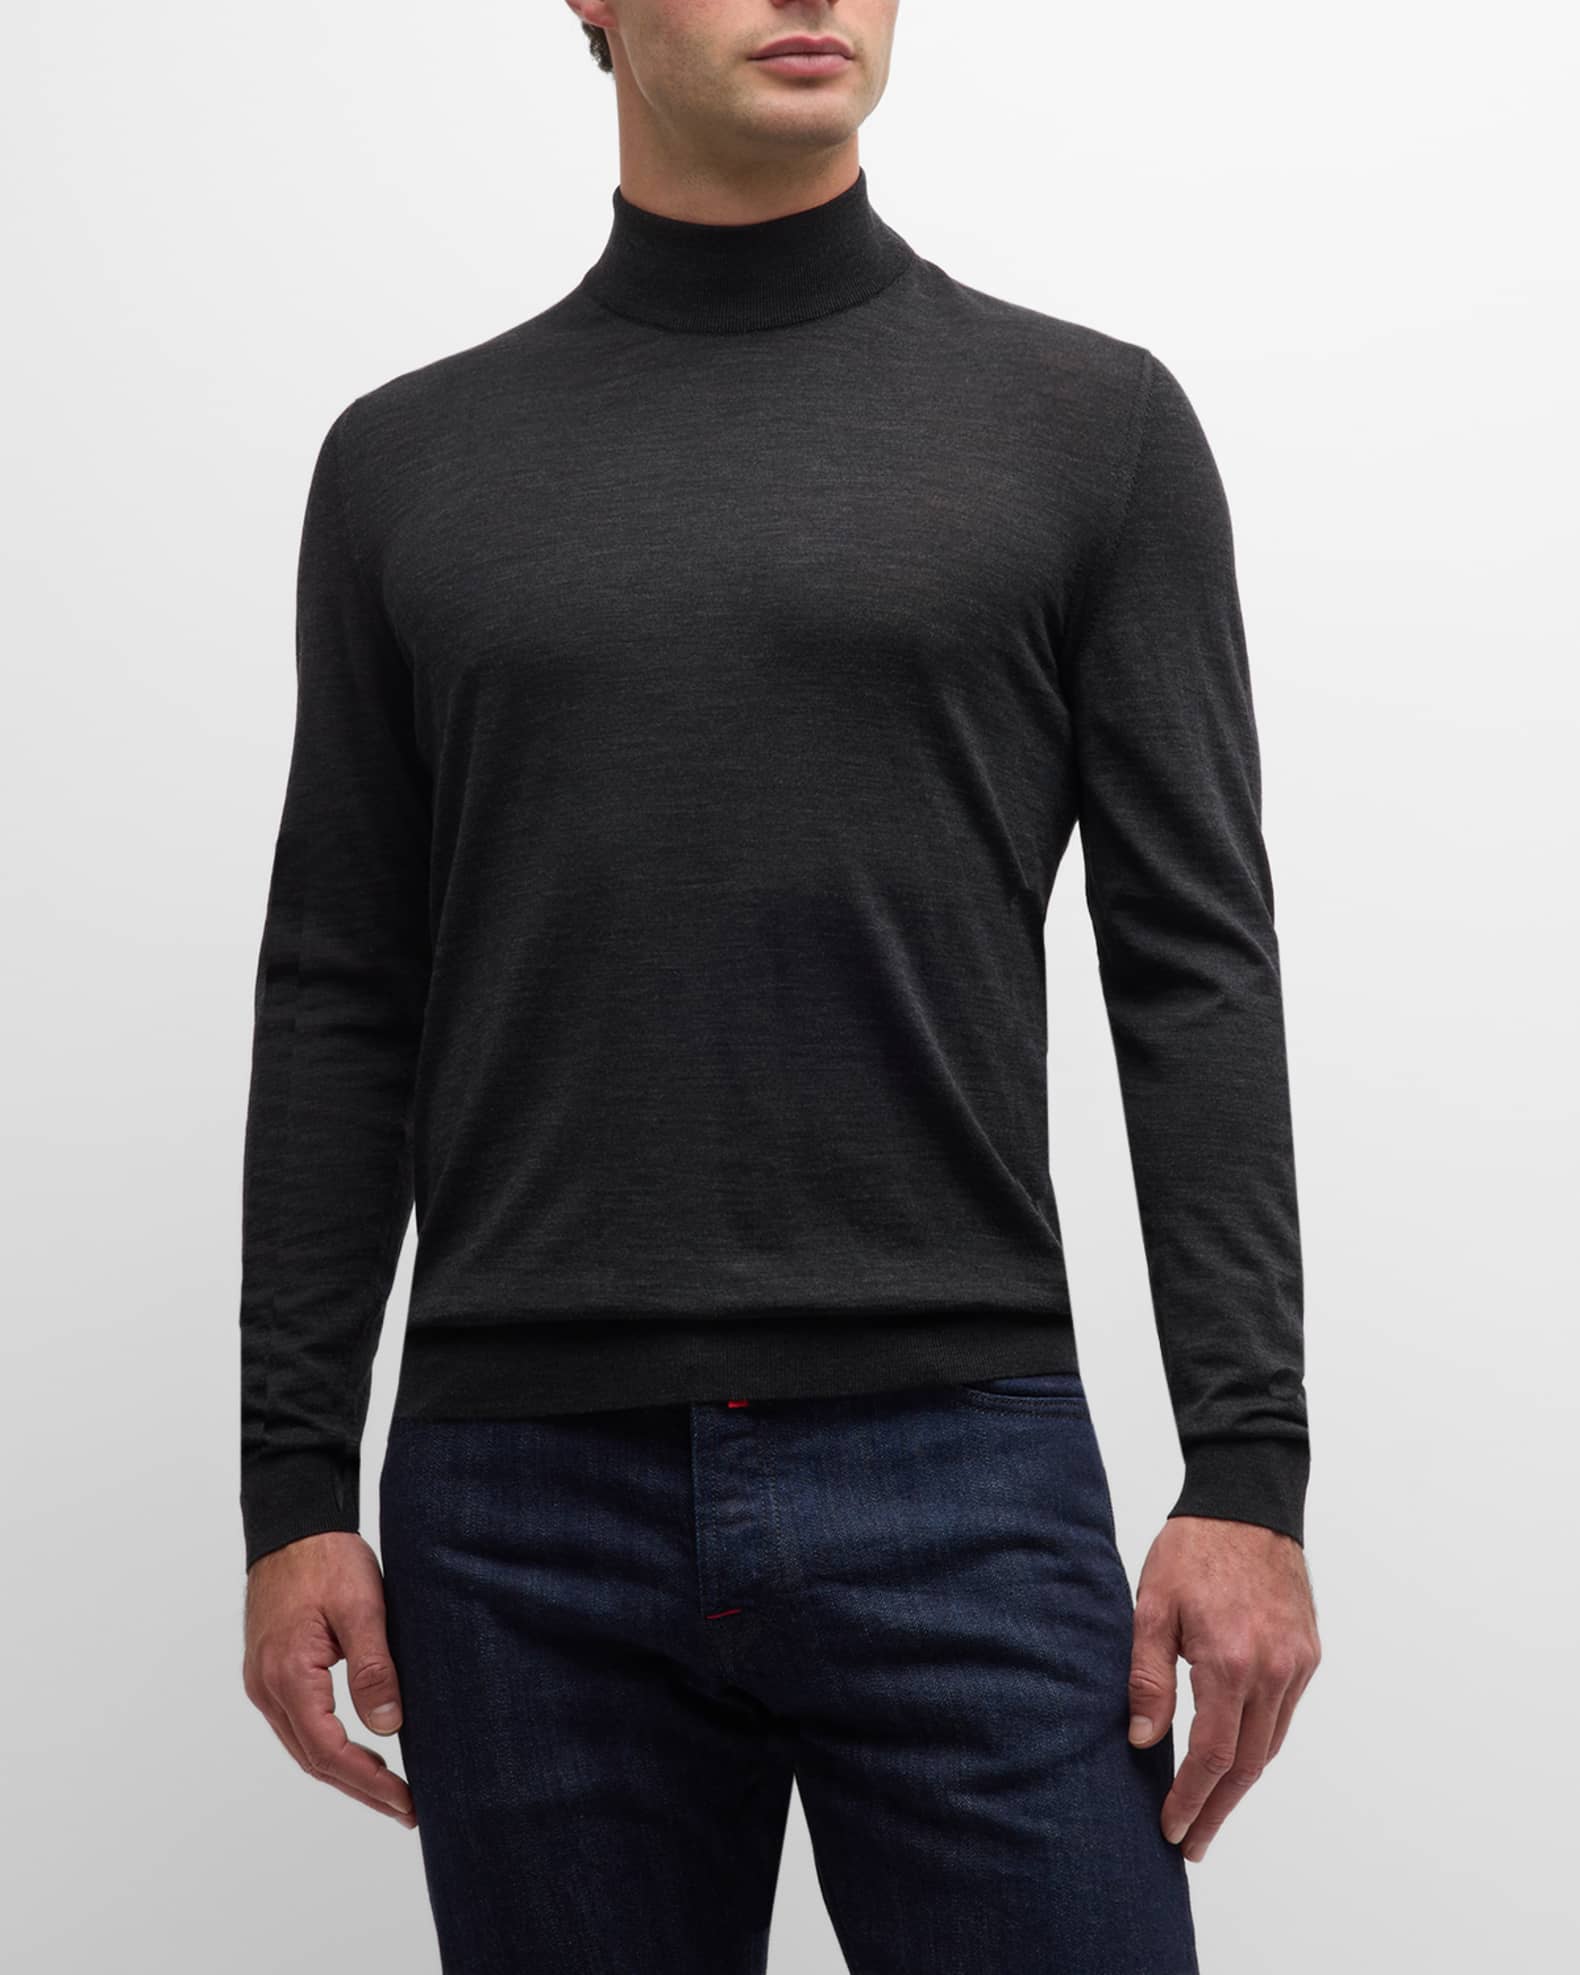 Neiman Marcus Black Mock Neck Sweater Discount | website.jkuat.ac.ke